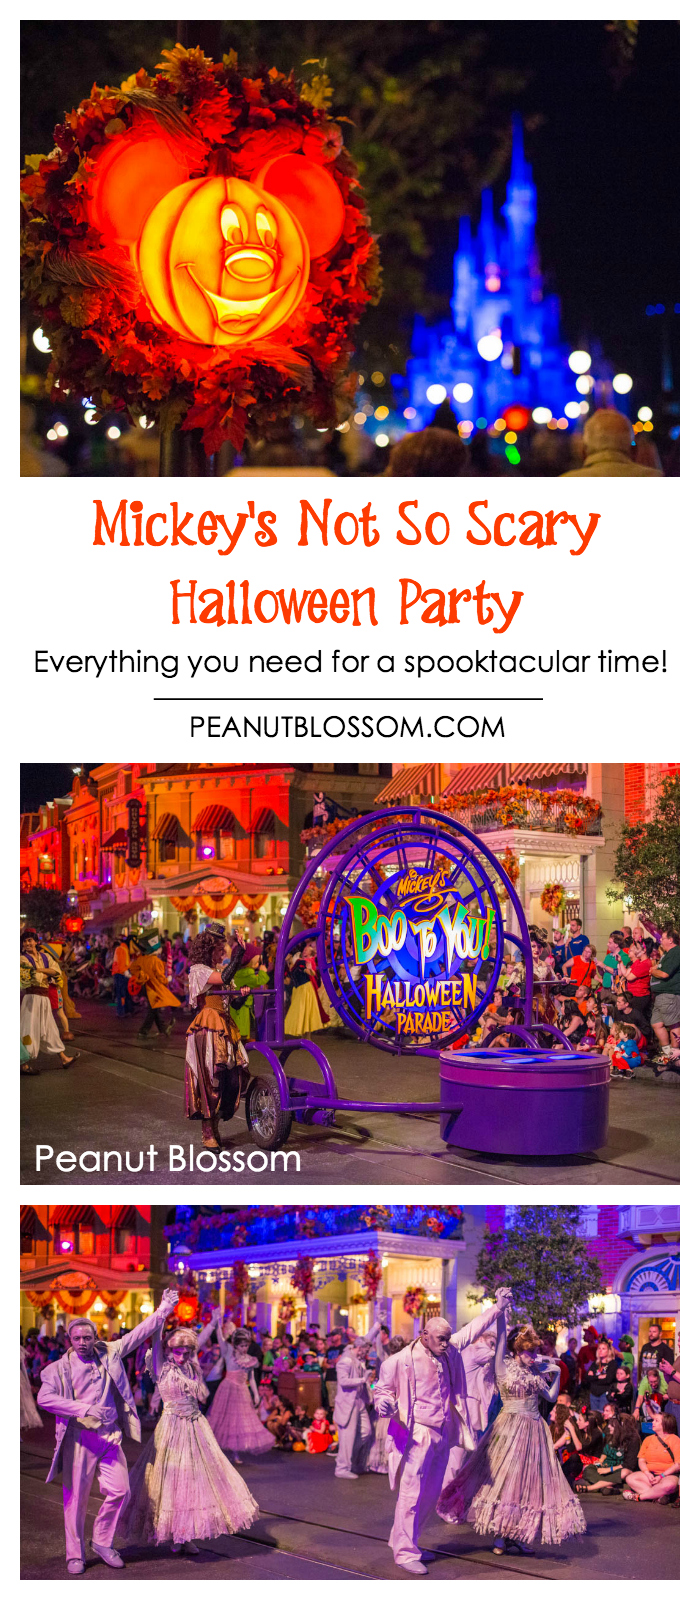 Mickey's Not So Scary Halloween Party tips